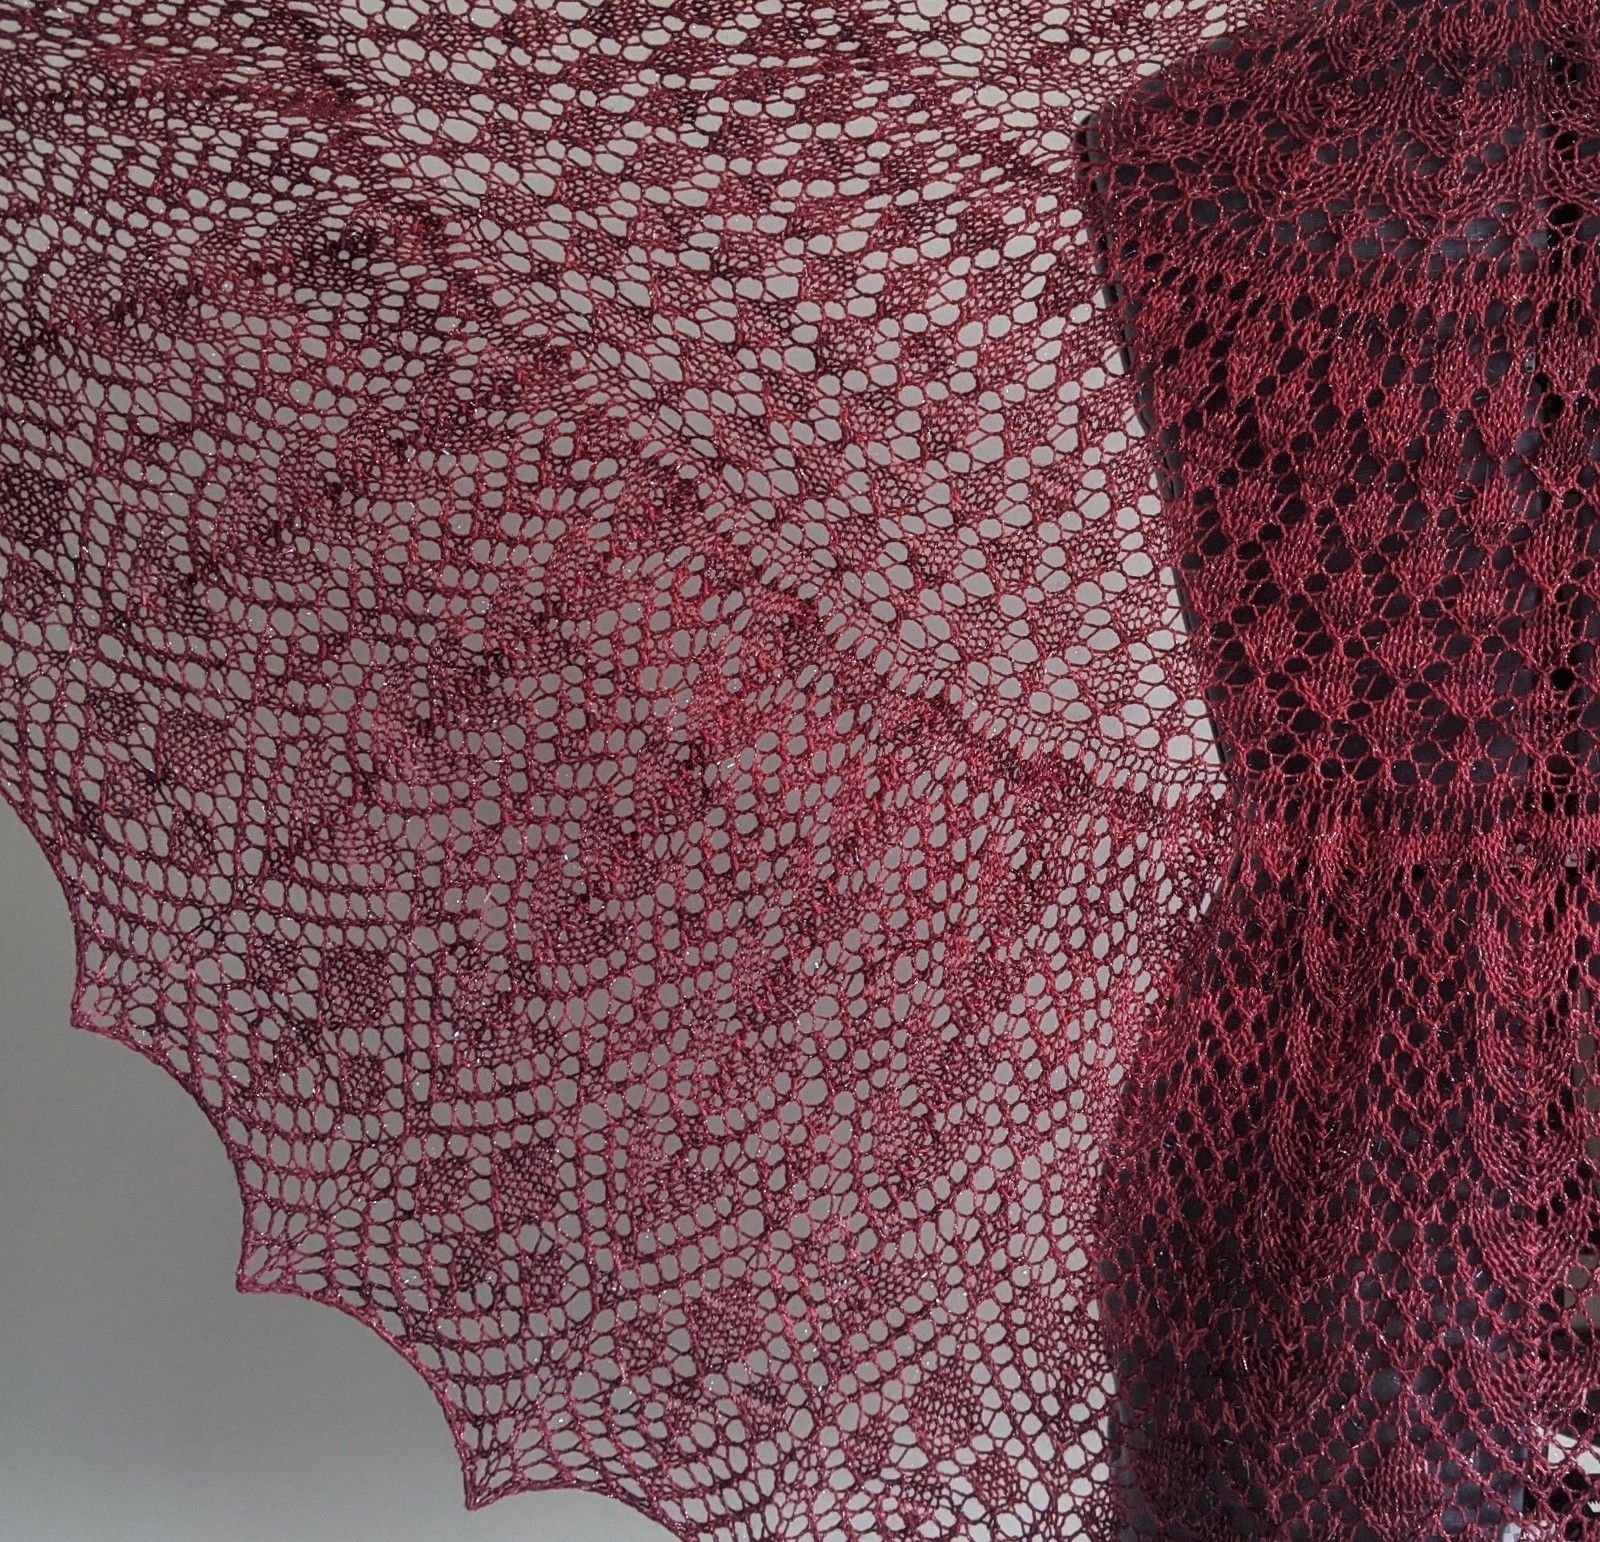 Knit by Abbey Perini, pattern by Dowland by Dee O'Keefe, yarn is Meeker Street by The Jewelry Box